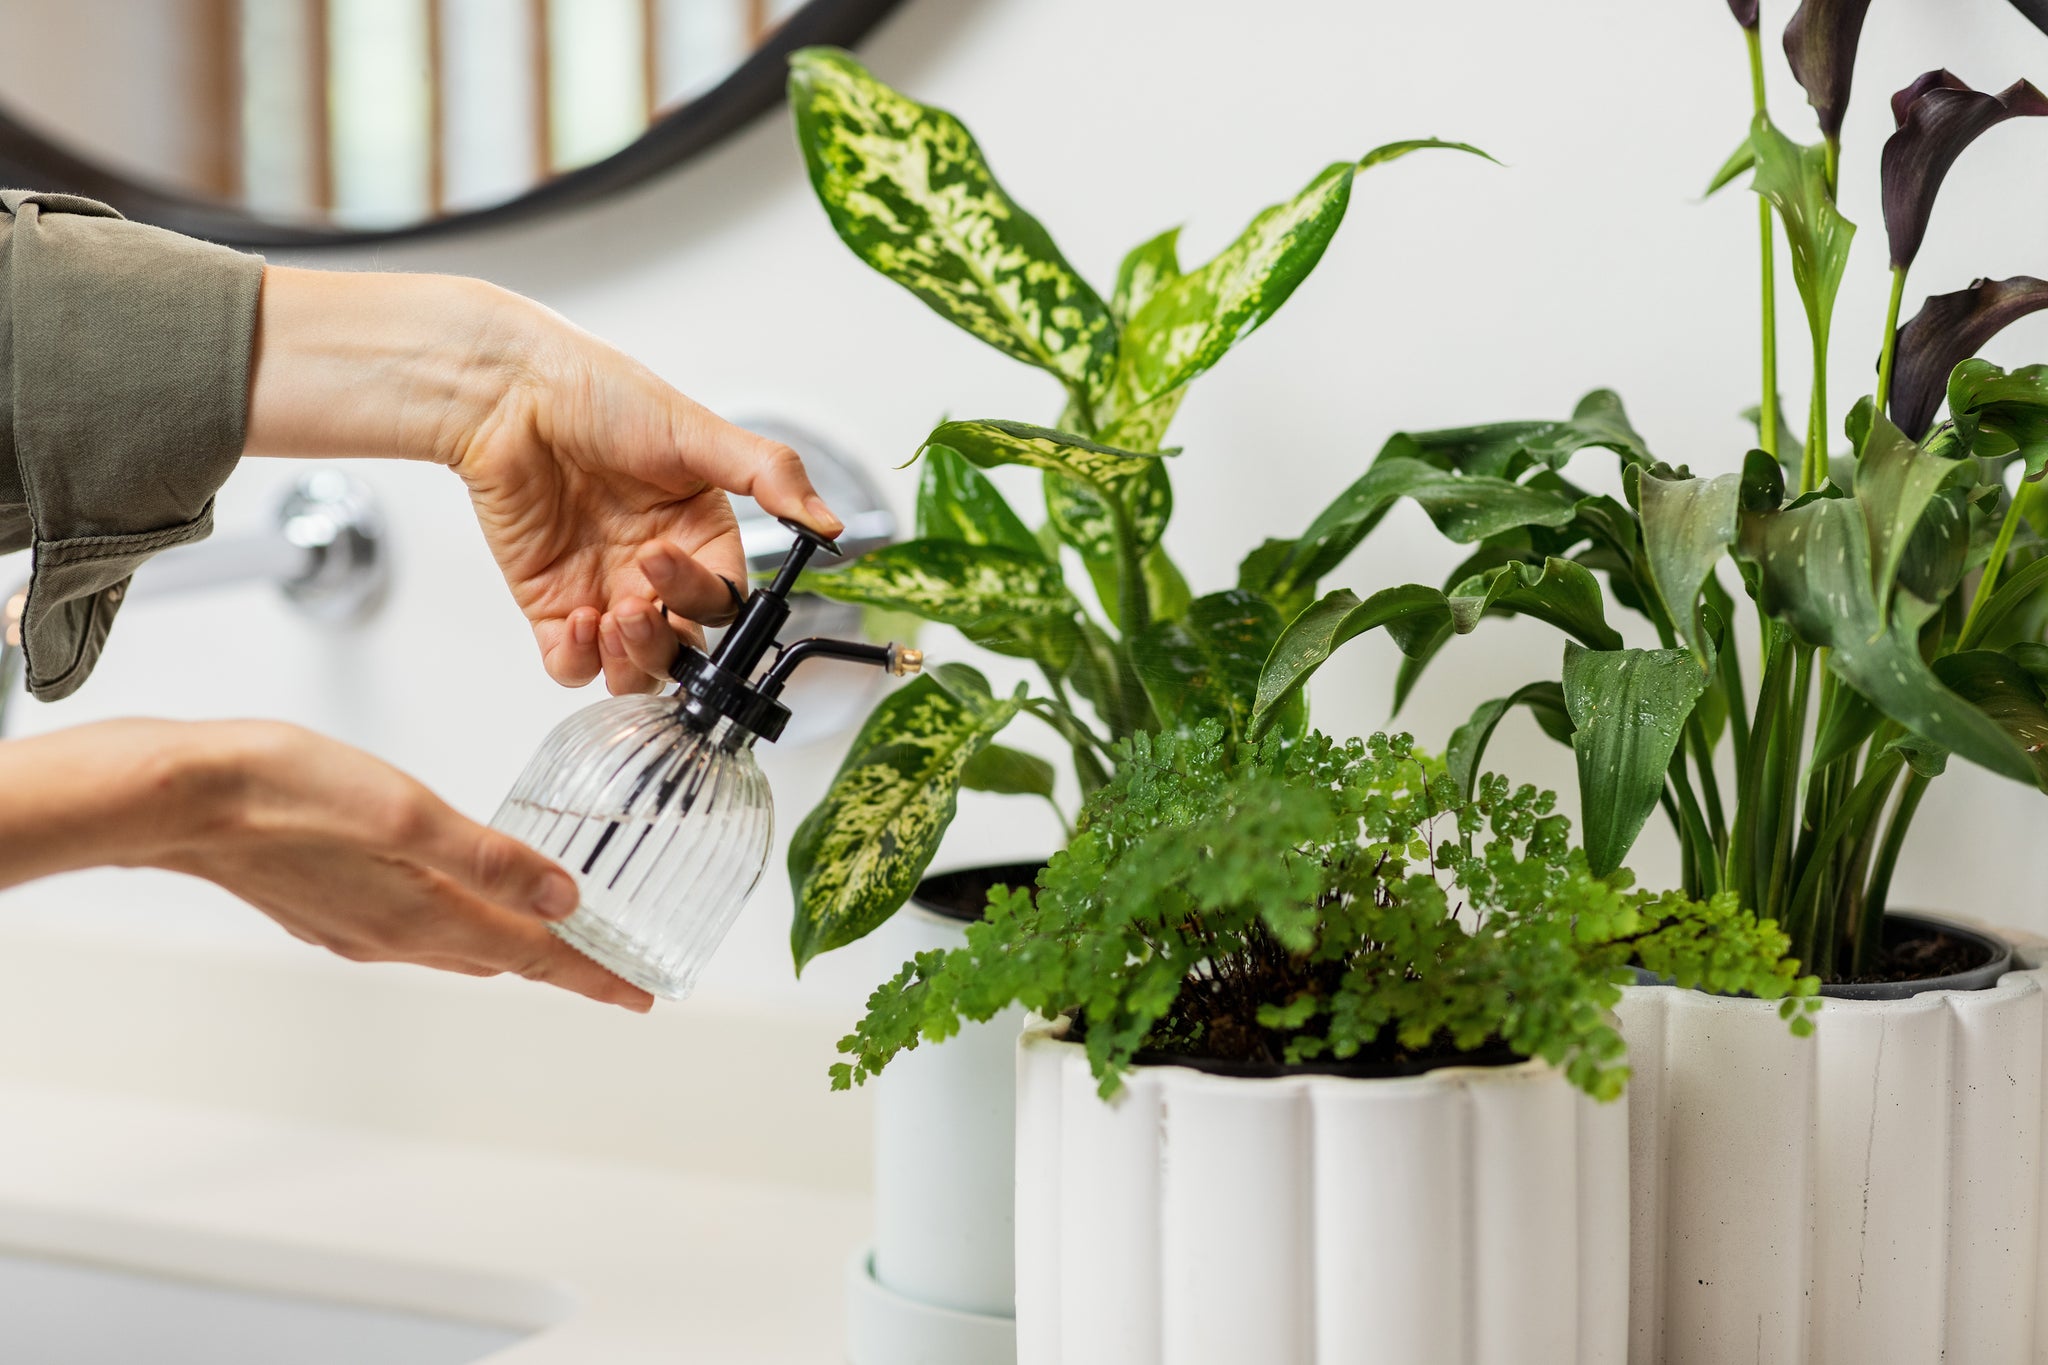 Regular plant misting has many benefits